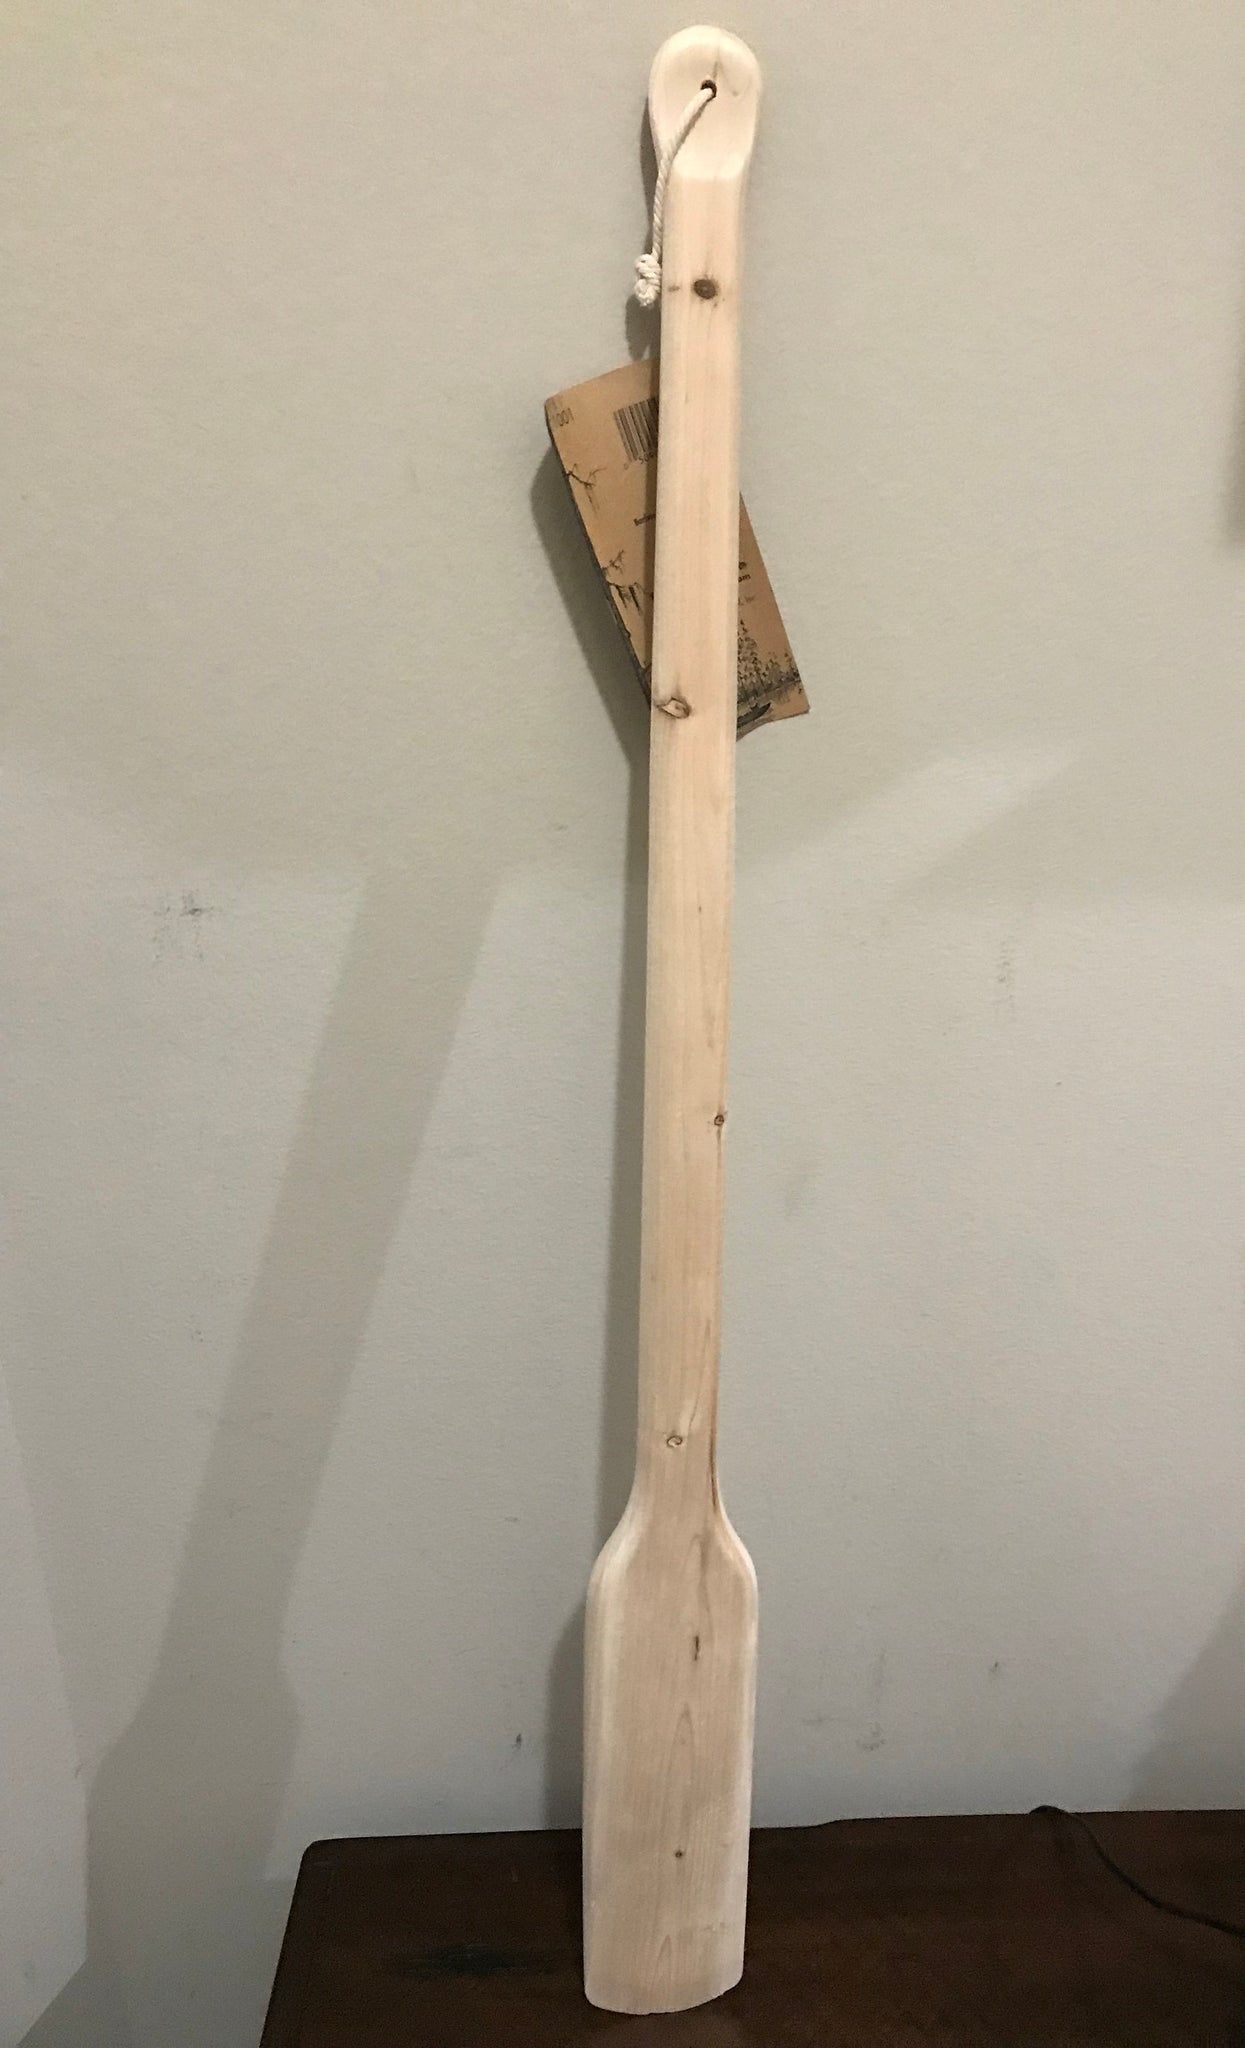 Crawfish Cooking Paddle - Laser Engraved/Personalized Wood